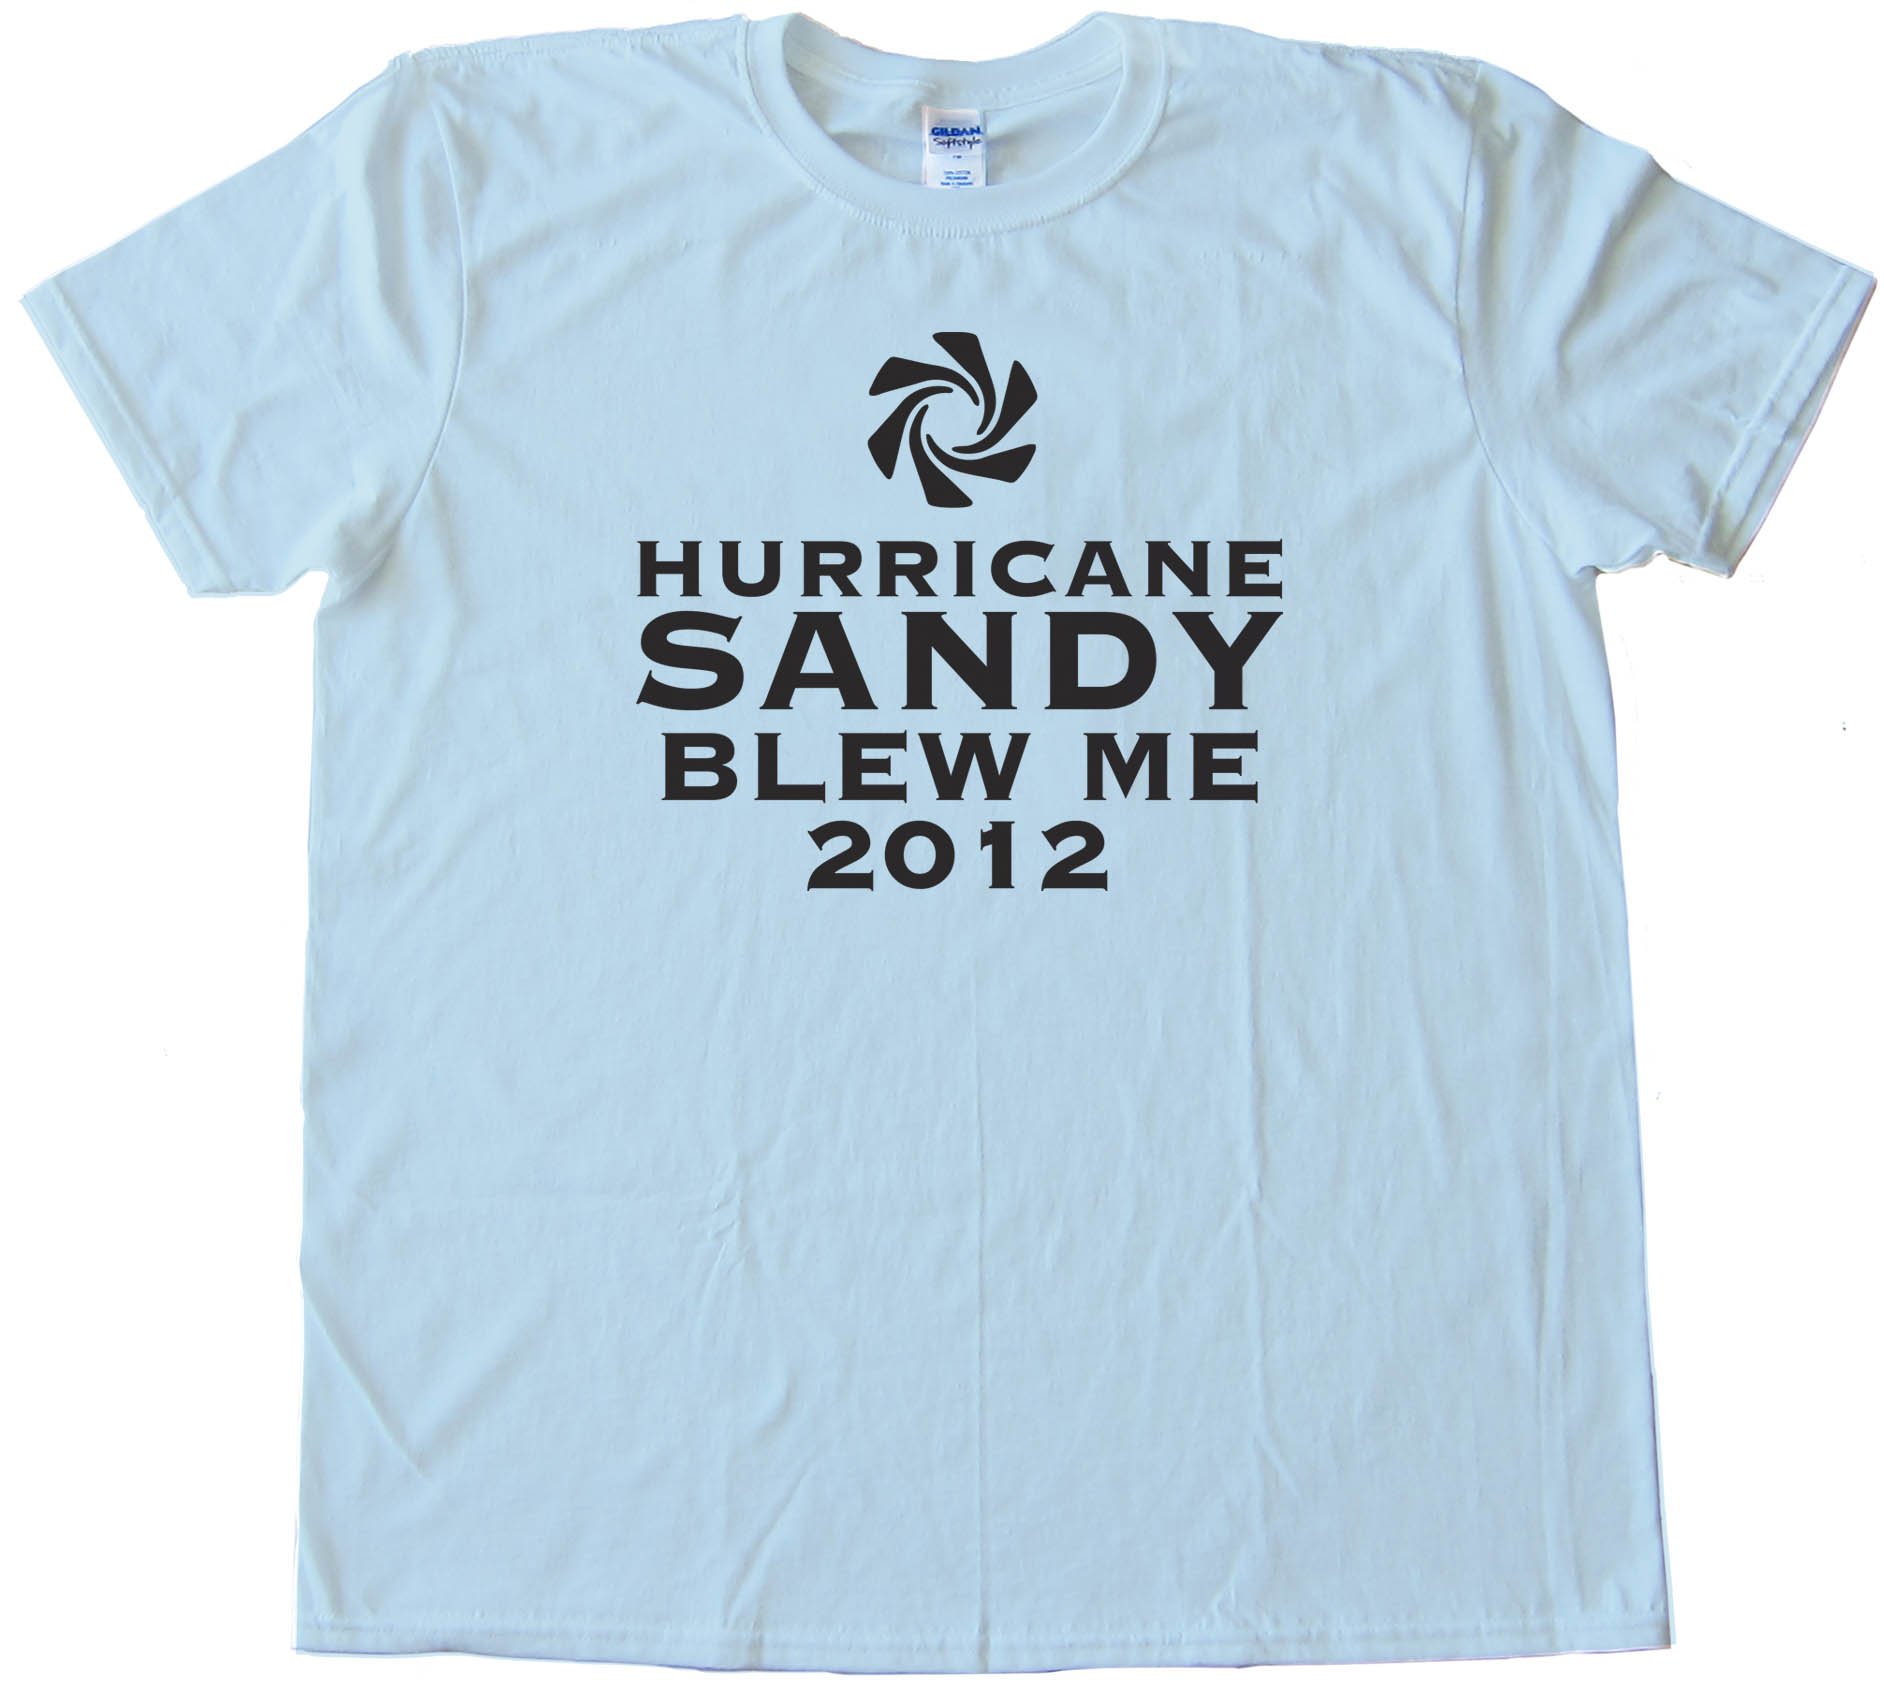 Hurricane Sandy Blew Me 2012 - Tee Shirt